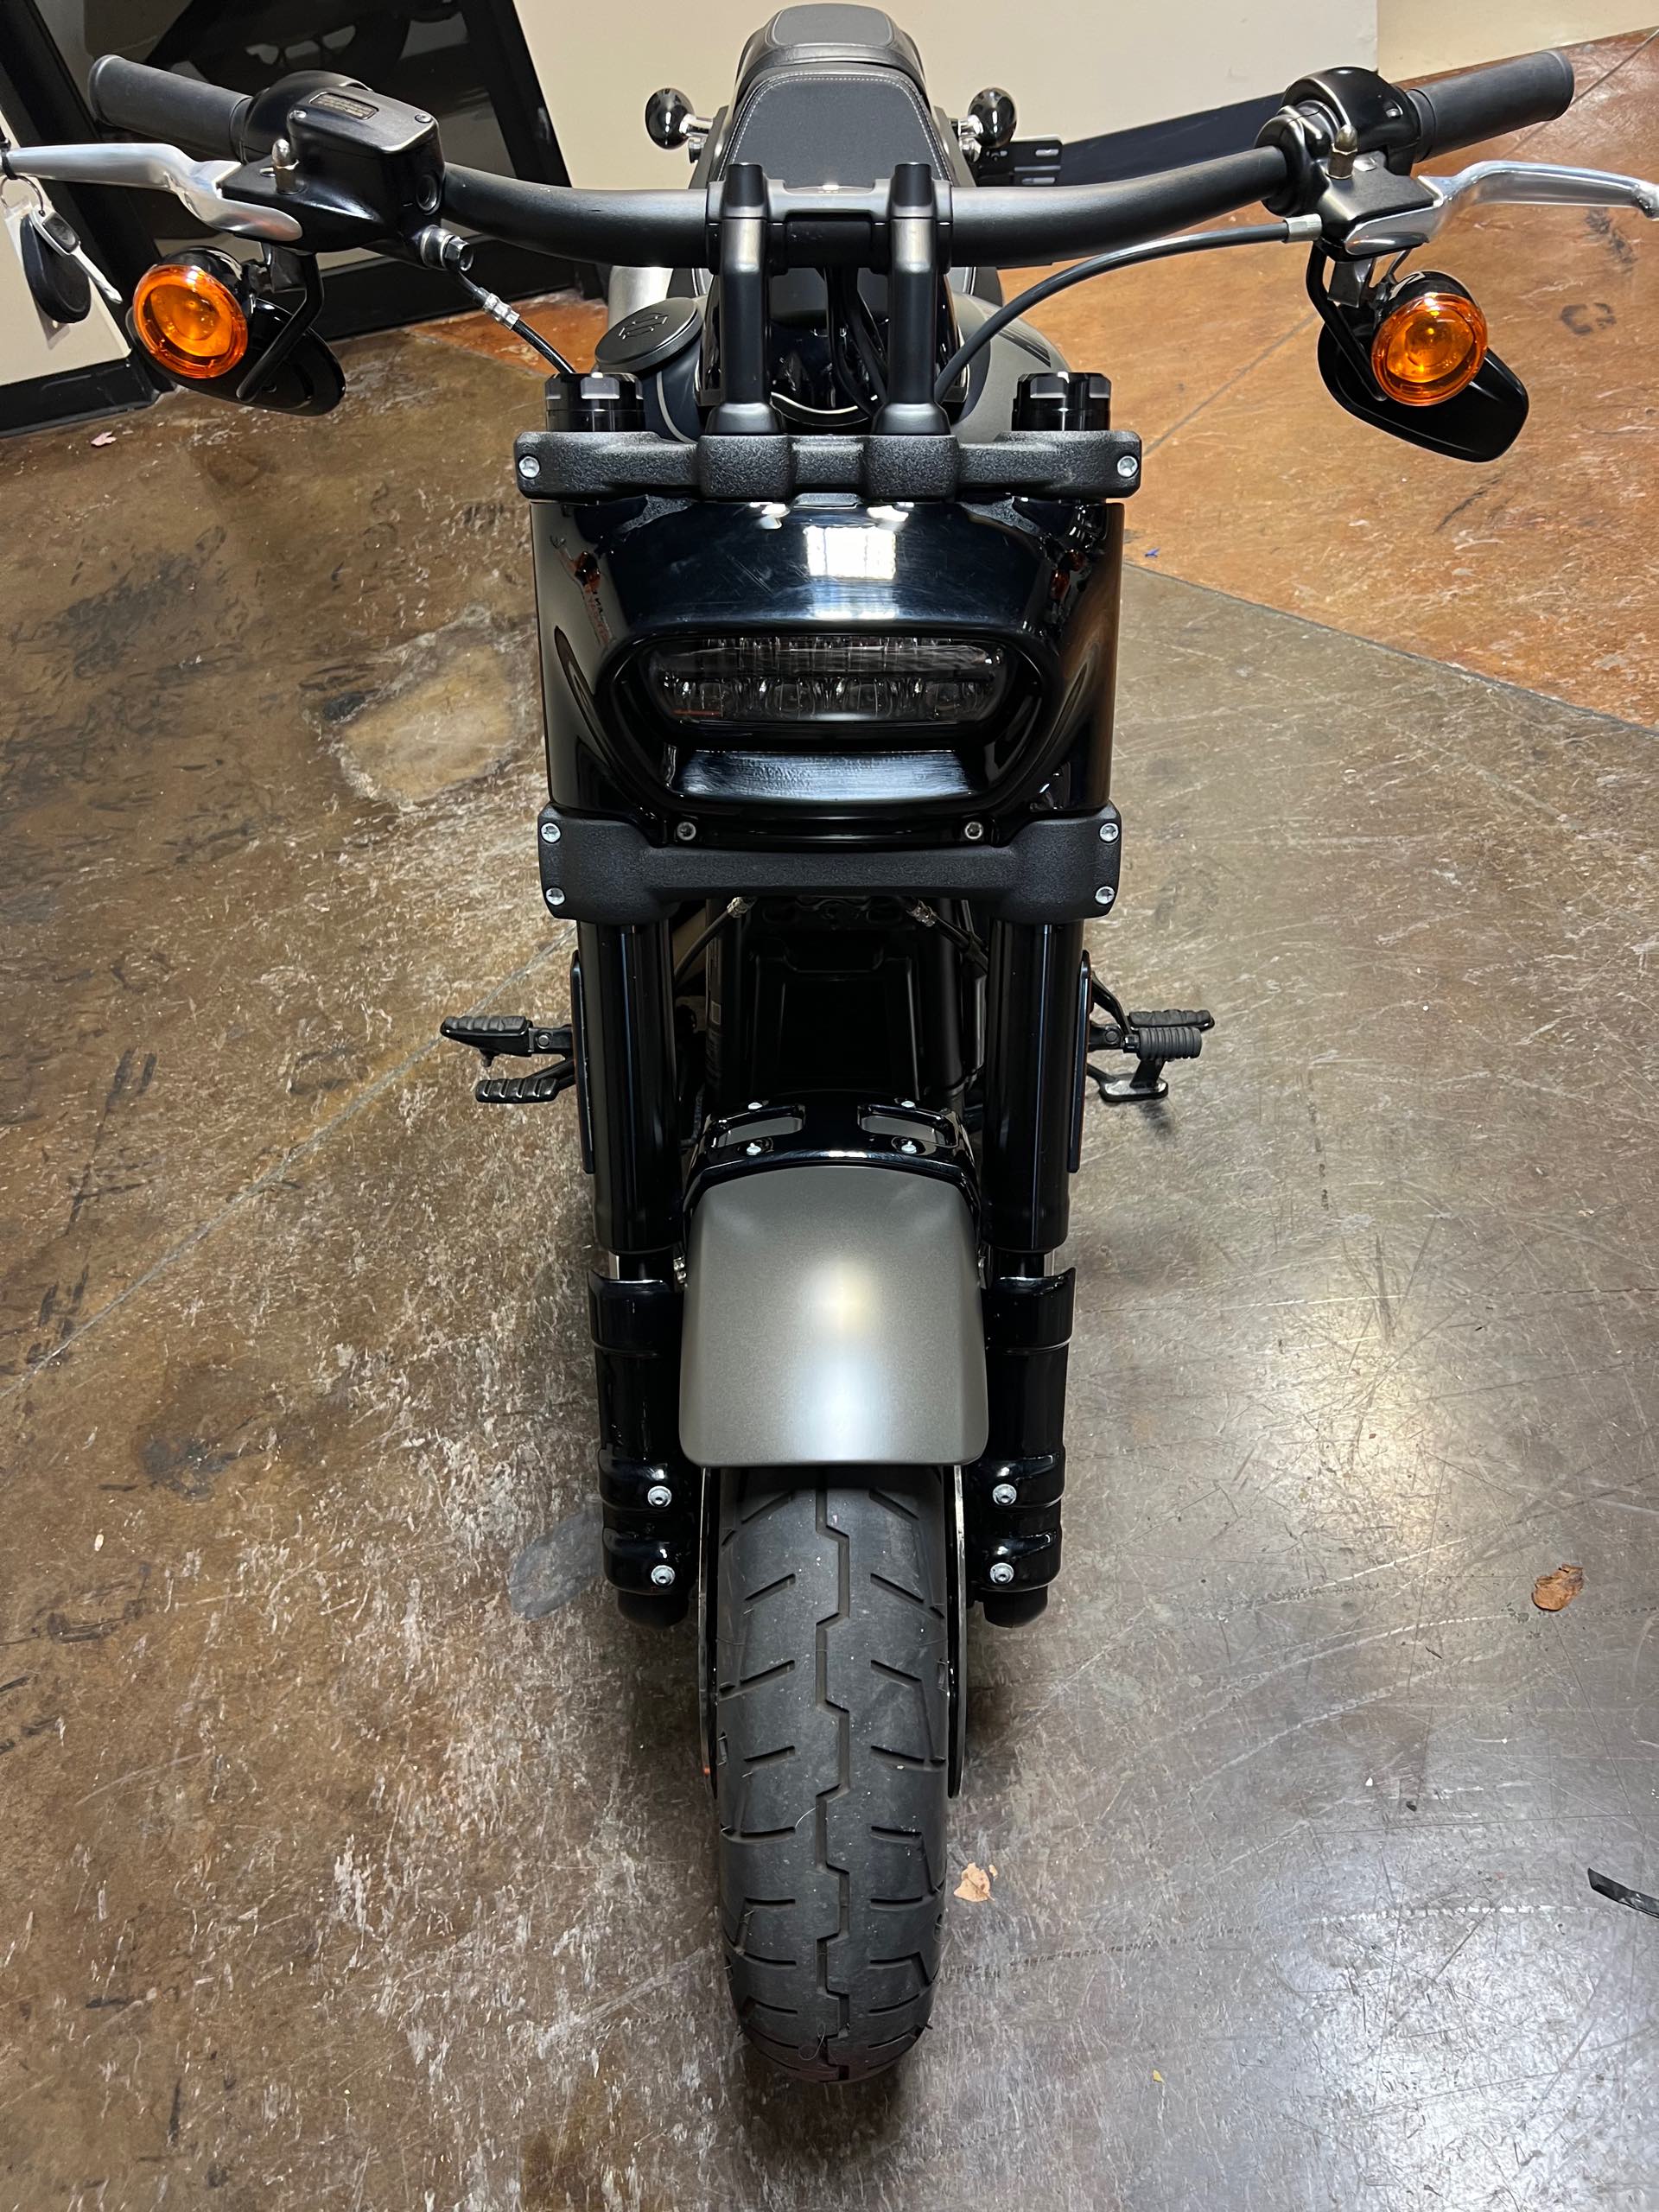 2018 Harley-Davidson Softail Fat Bob at Southern Devil Harley-Davidson